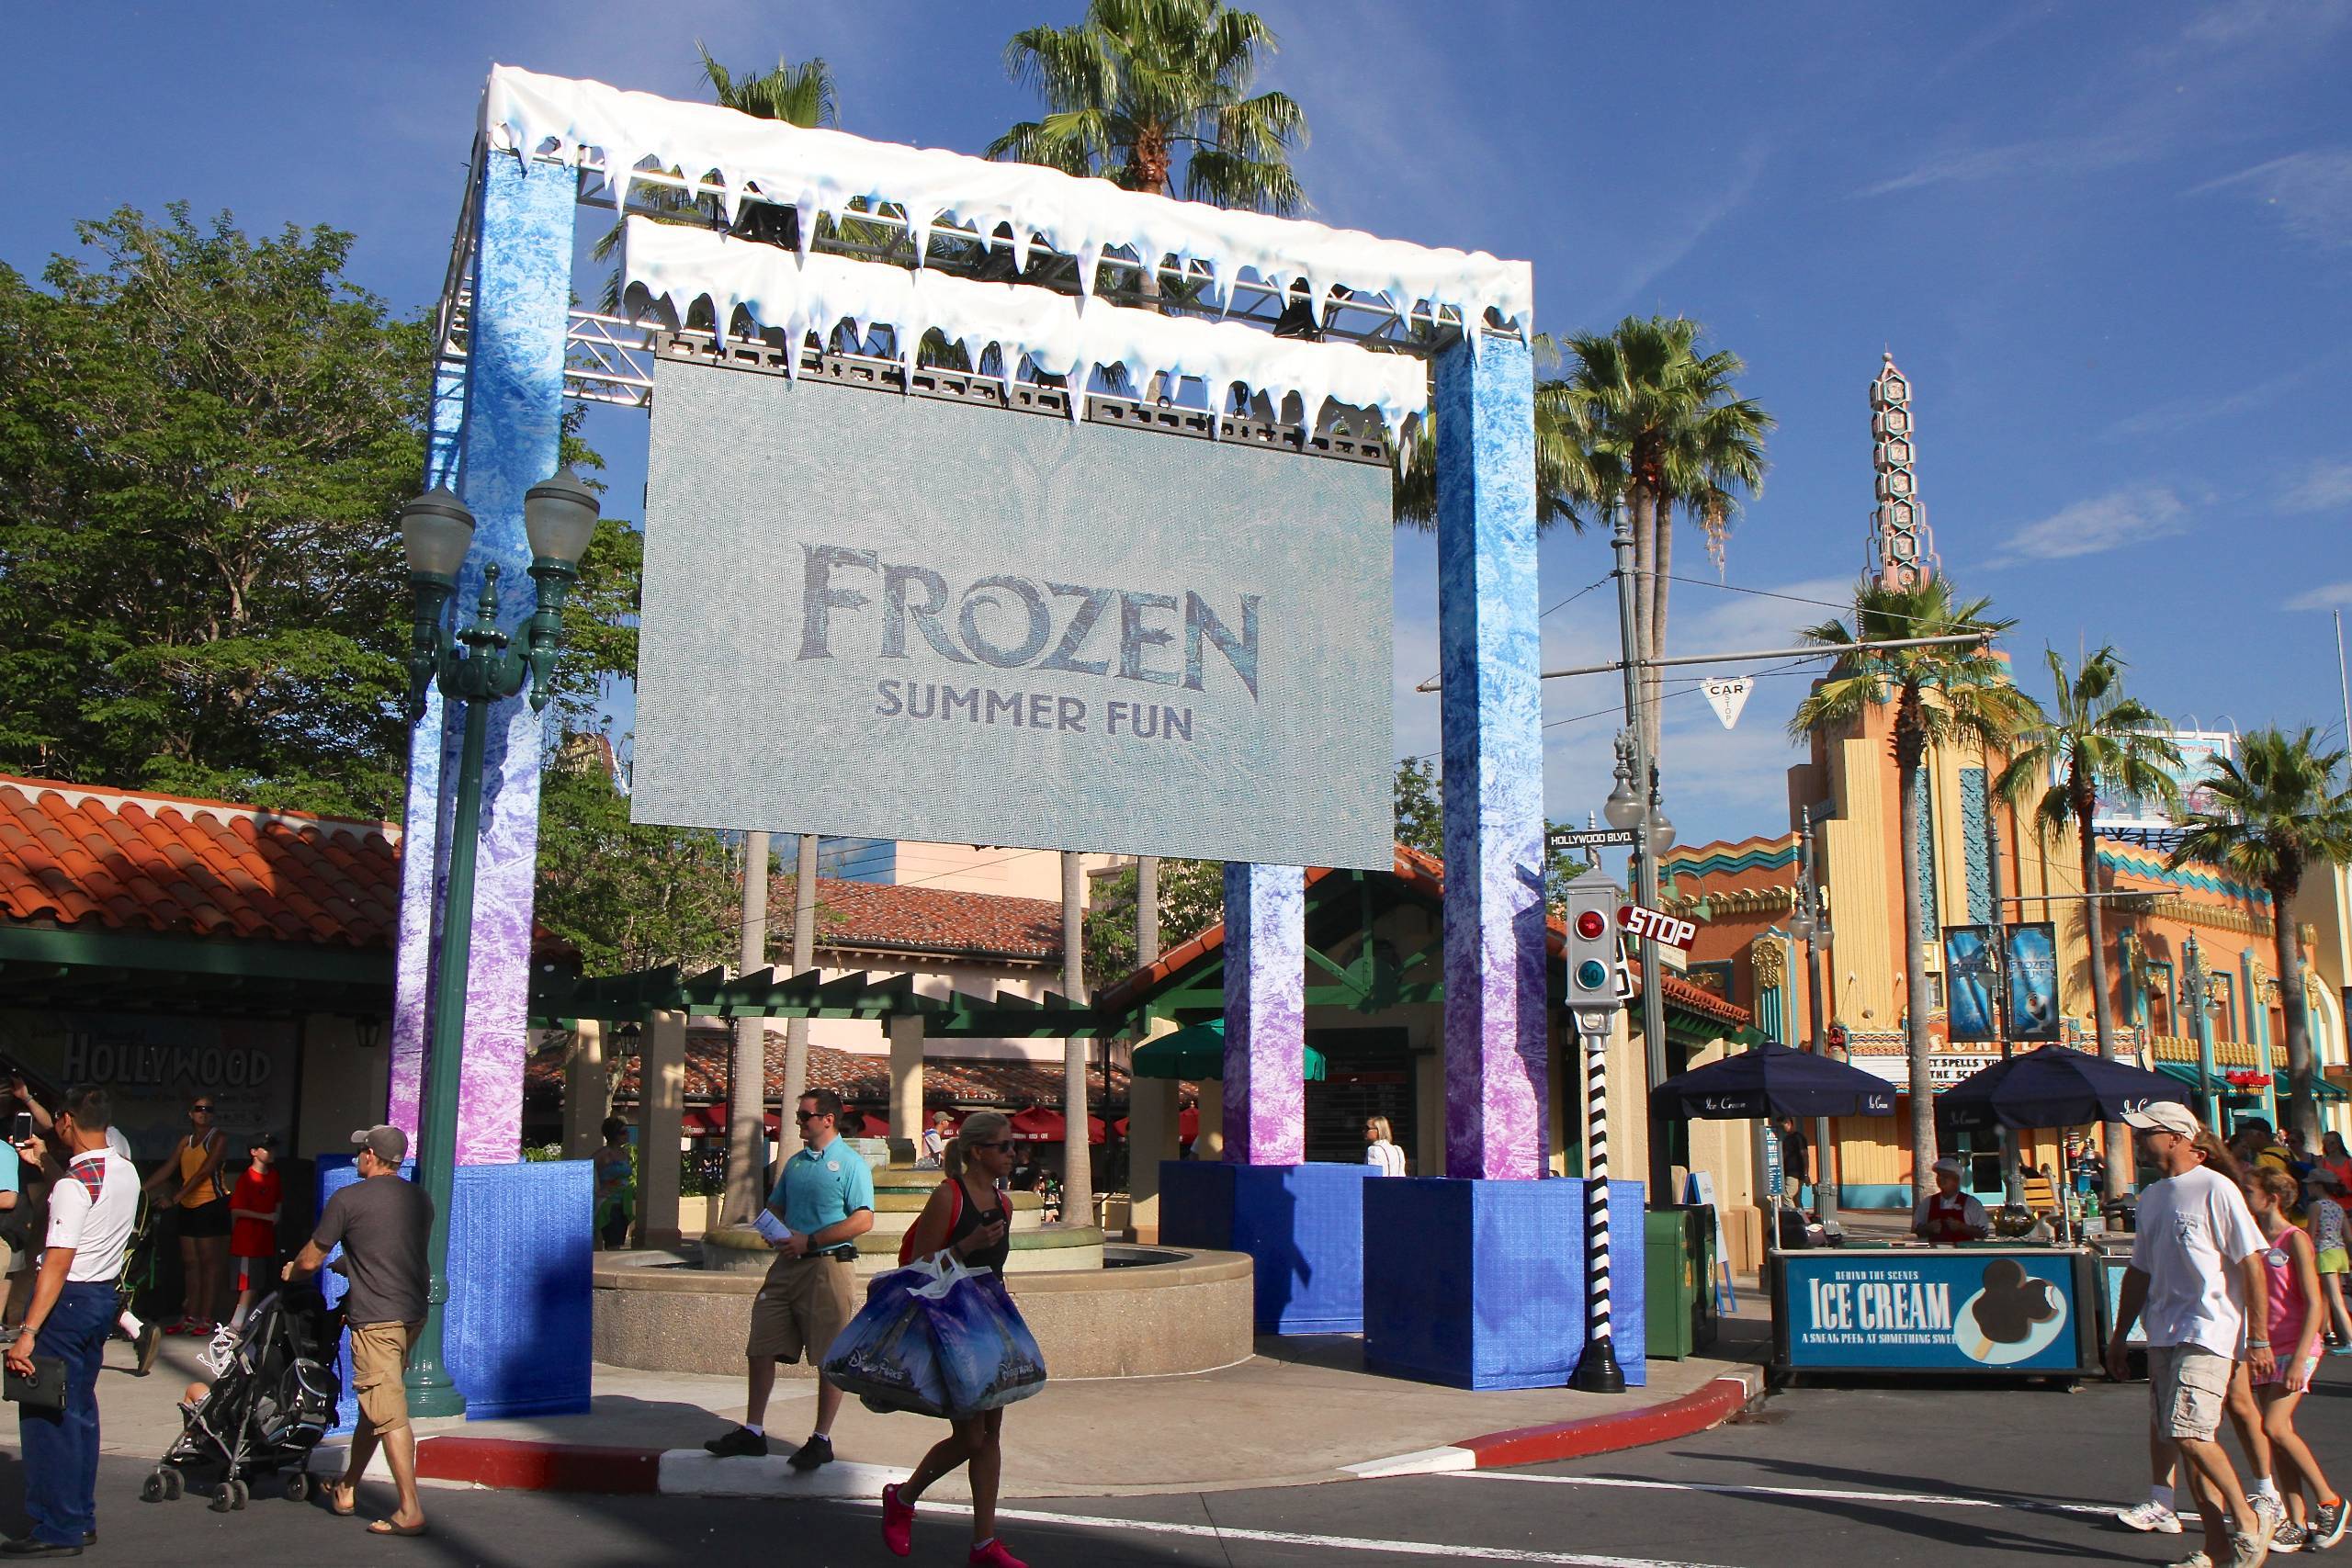 Frozen Summer Fun - Secondary viewing screen along Hollywood Blvd